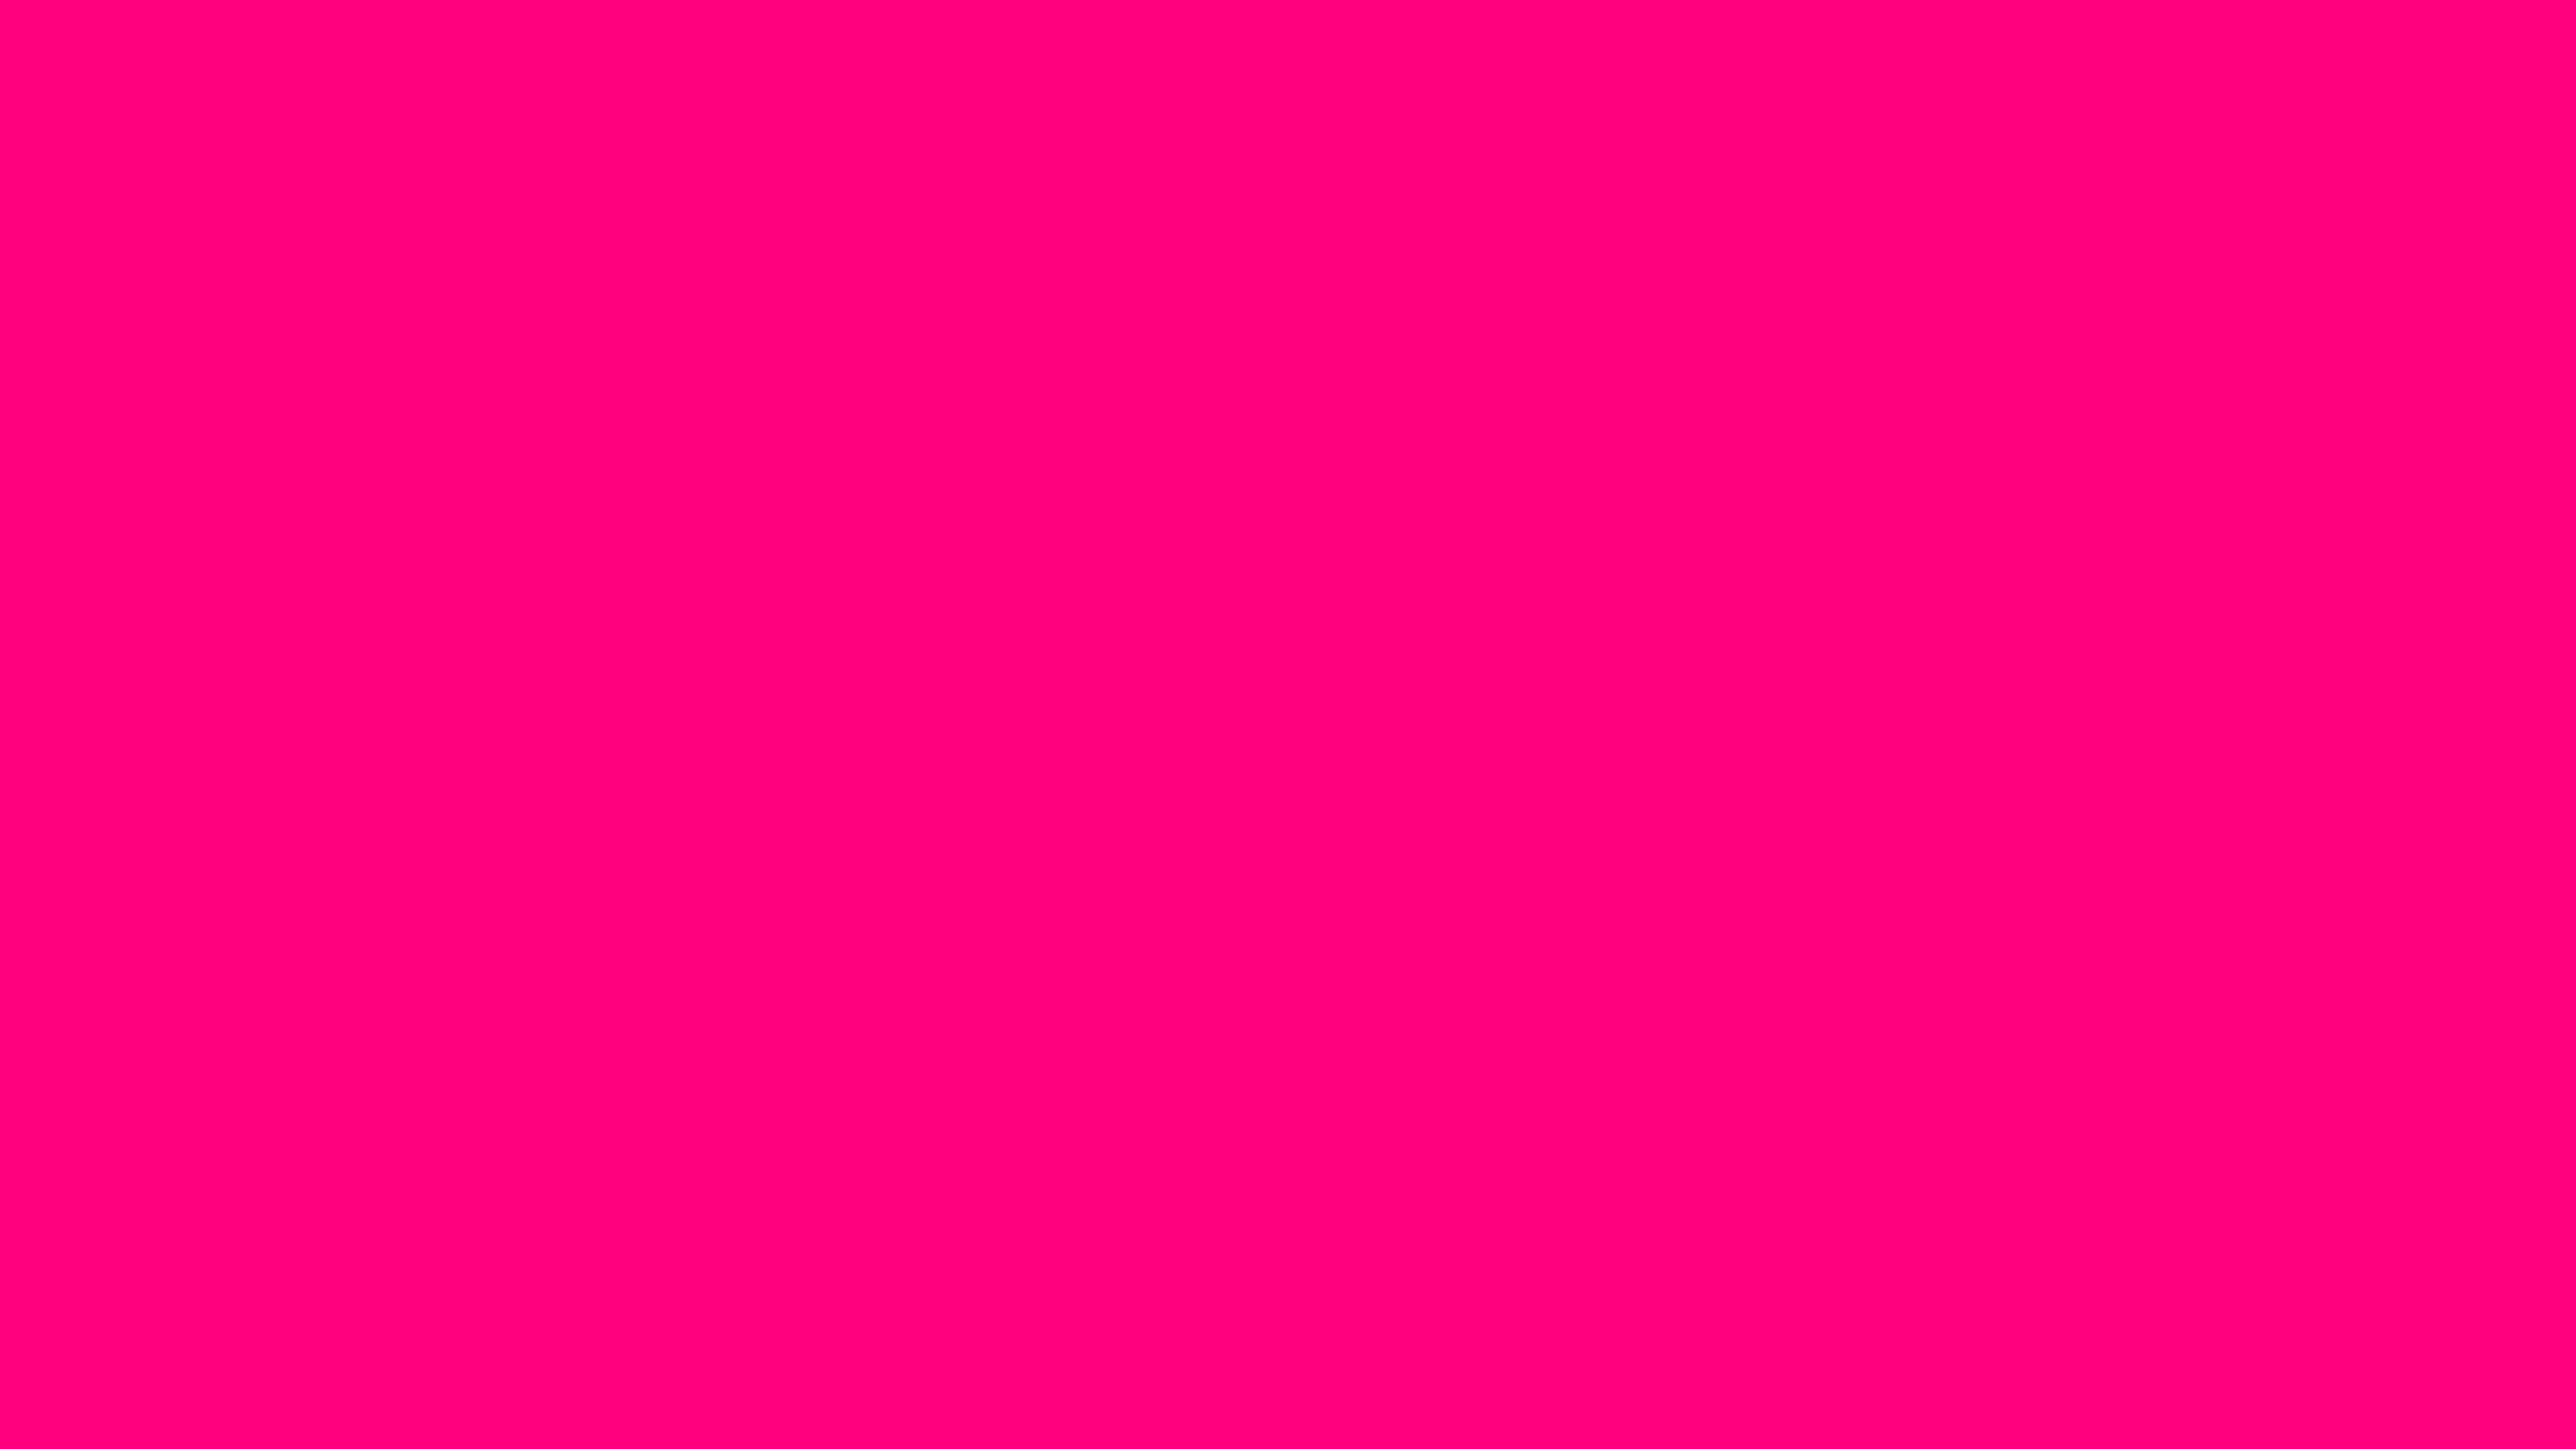 3840x2160 Rose Solid Color Background